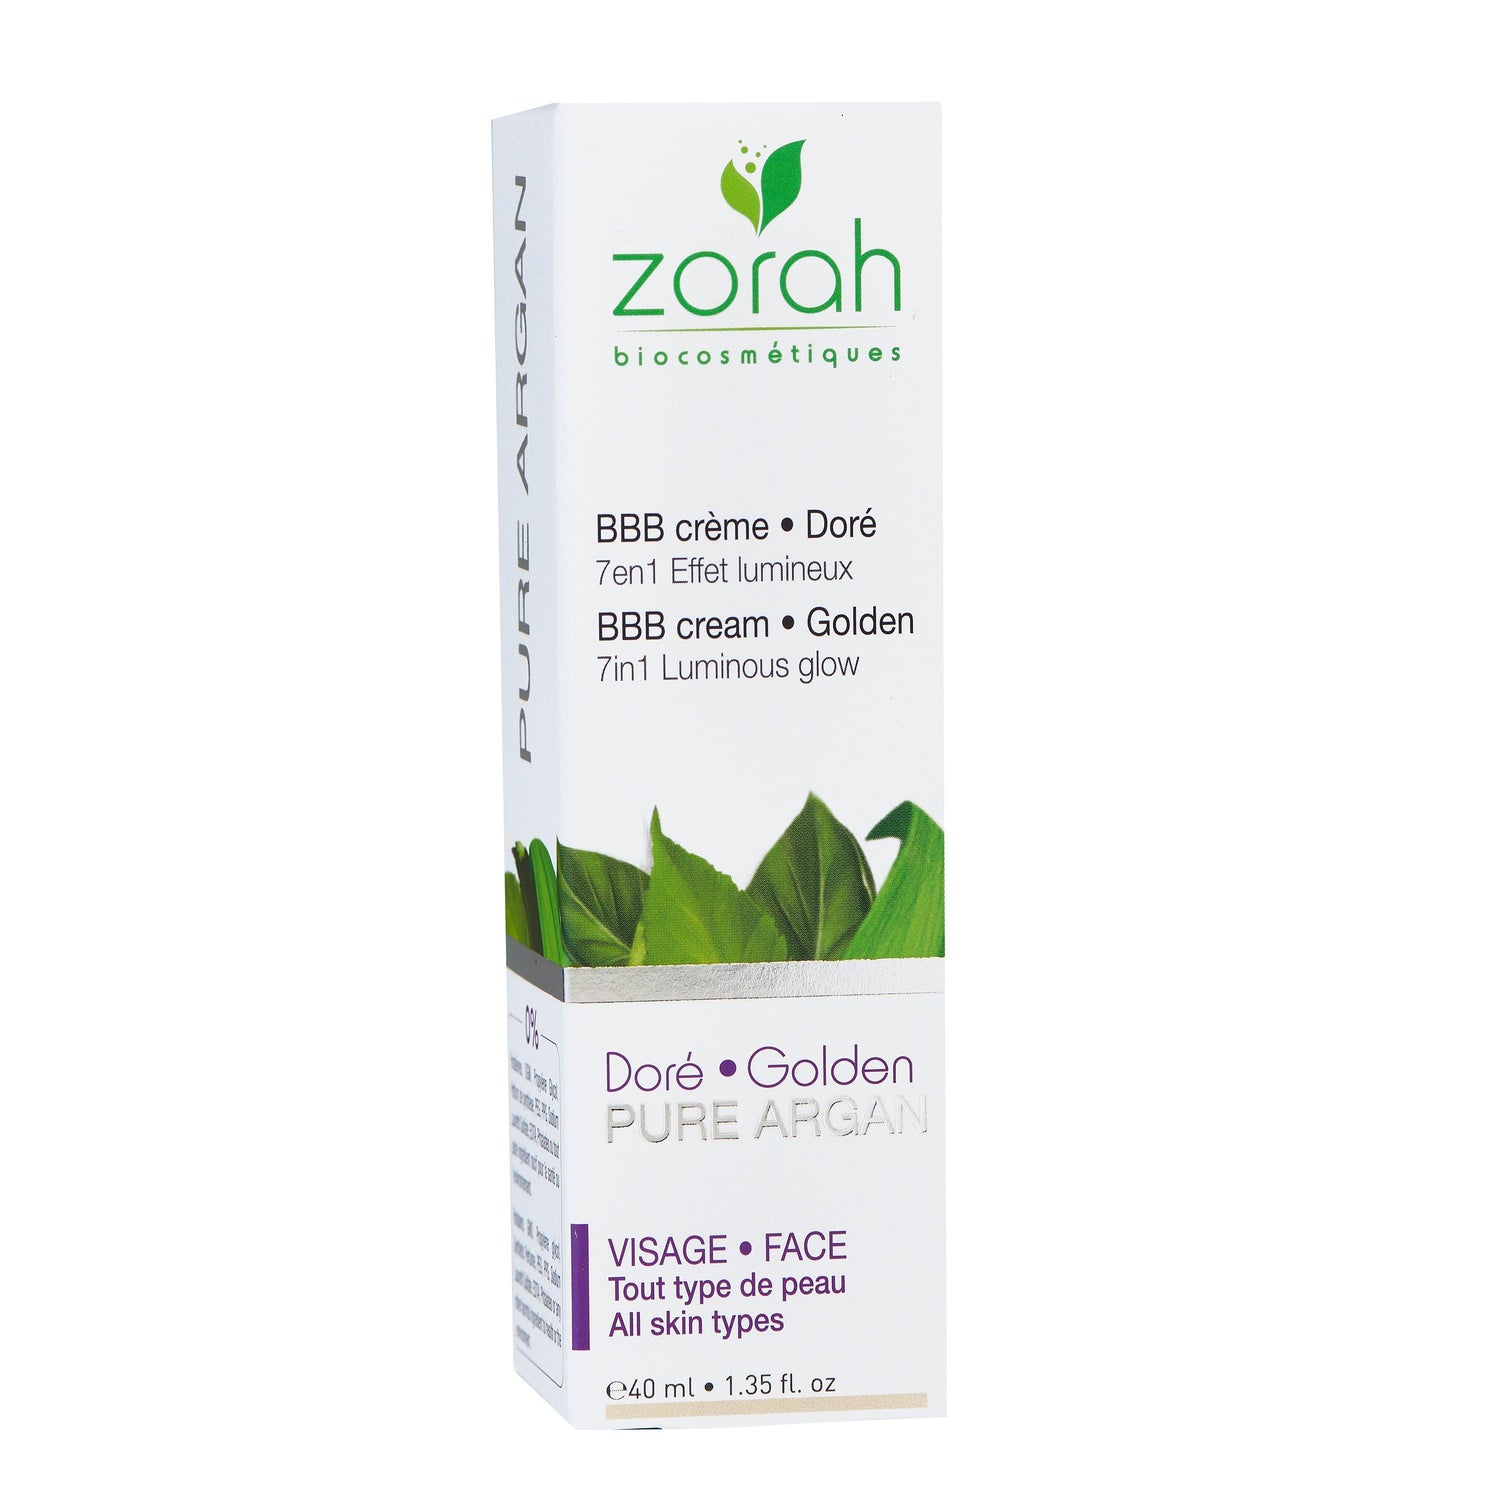 BB cream 7 in 1 - Zorah biocosmétiques